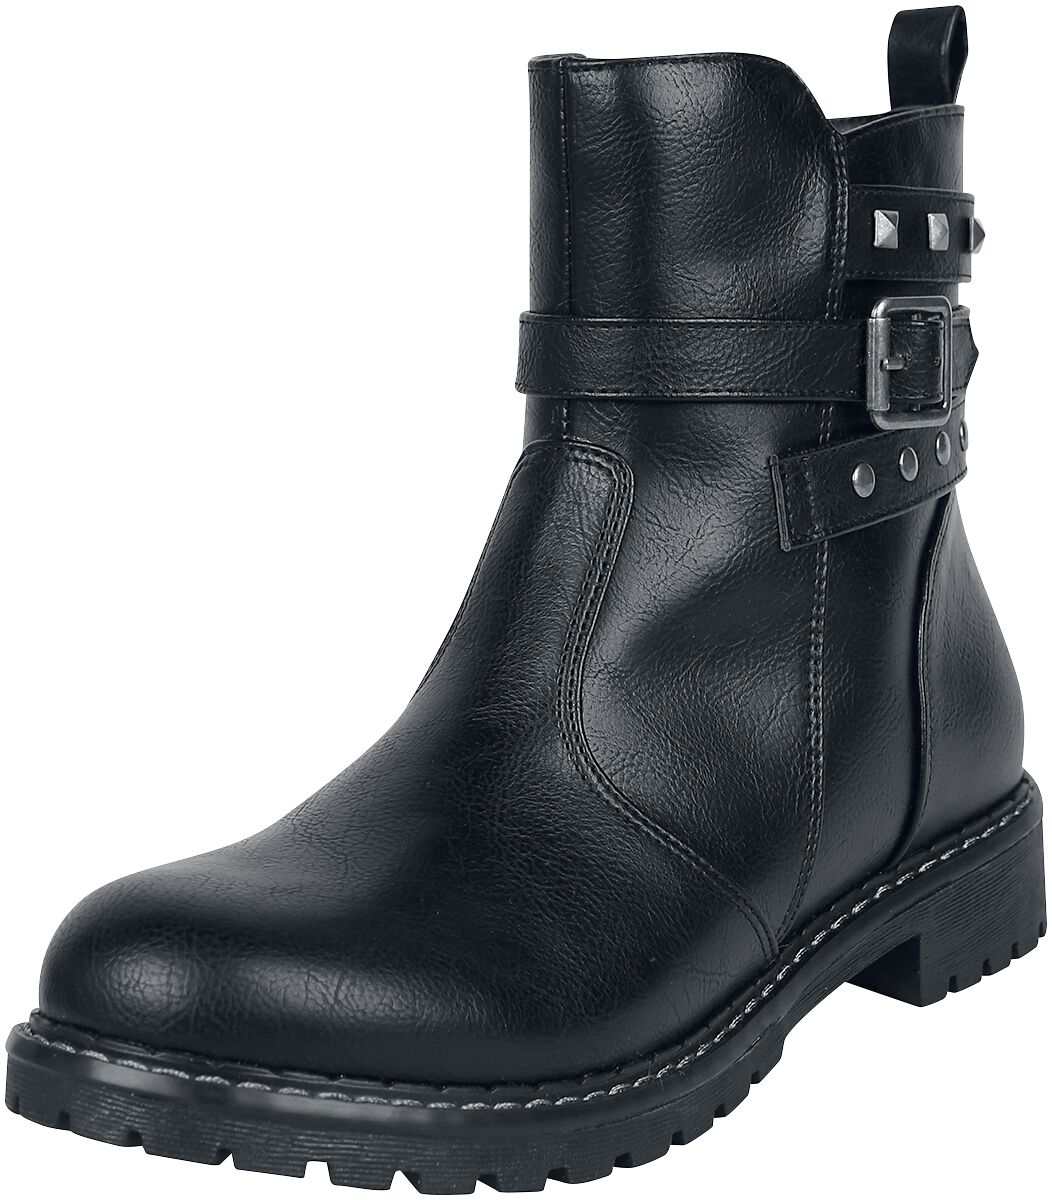 Black Premium by EMP Boots with Studs and Buckles Bikerboot schwarz in EU40